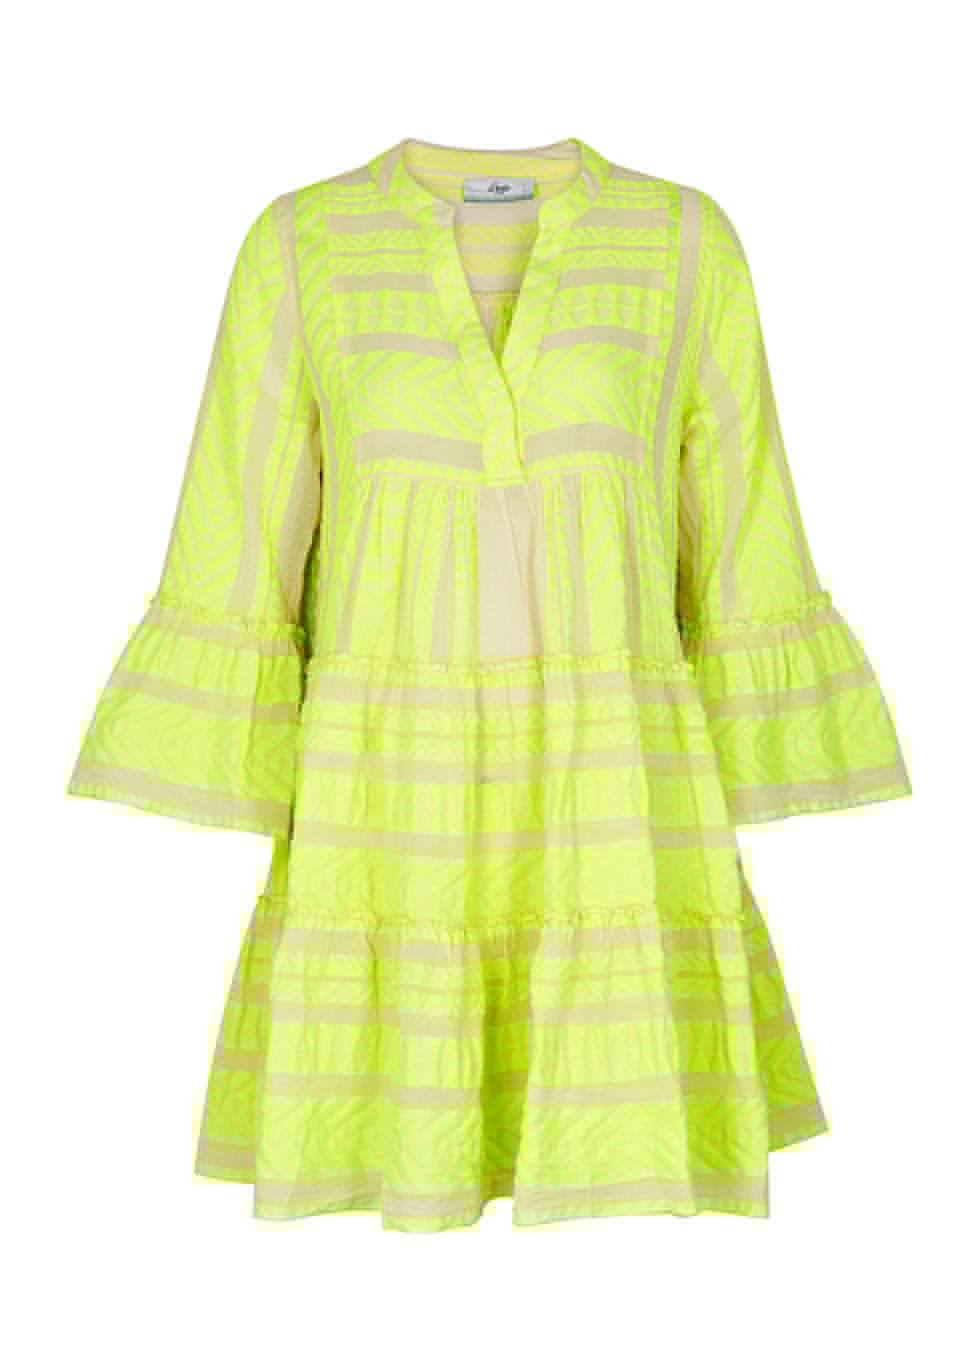 Ella neon yellow embroidered cotton mini dress by DEVOTION TWINS